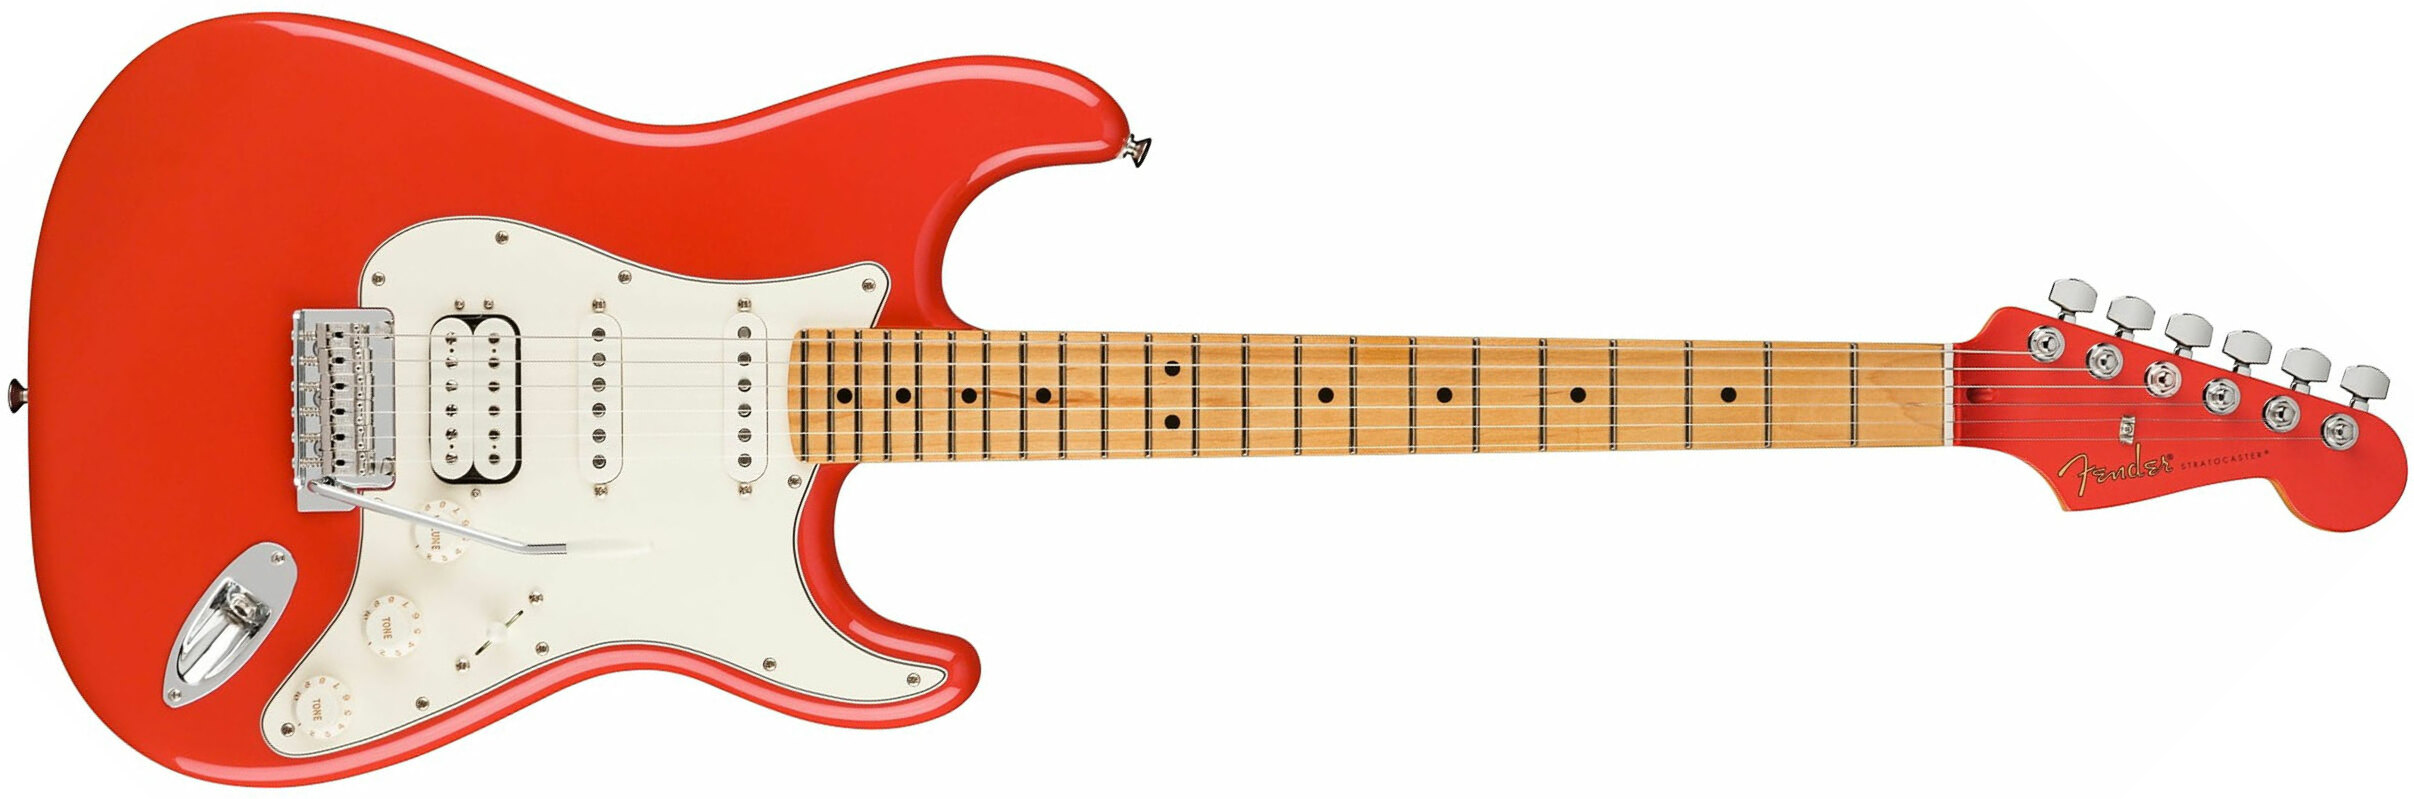 Fender Strat Player Hss Ltd Mex Trem Mn - Fiesta Red - Guitarra eléctrica con forma de str. - Main picture